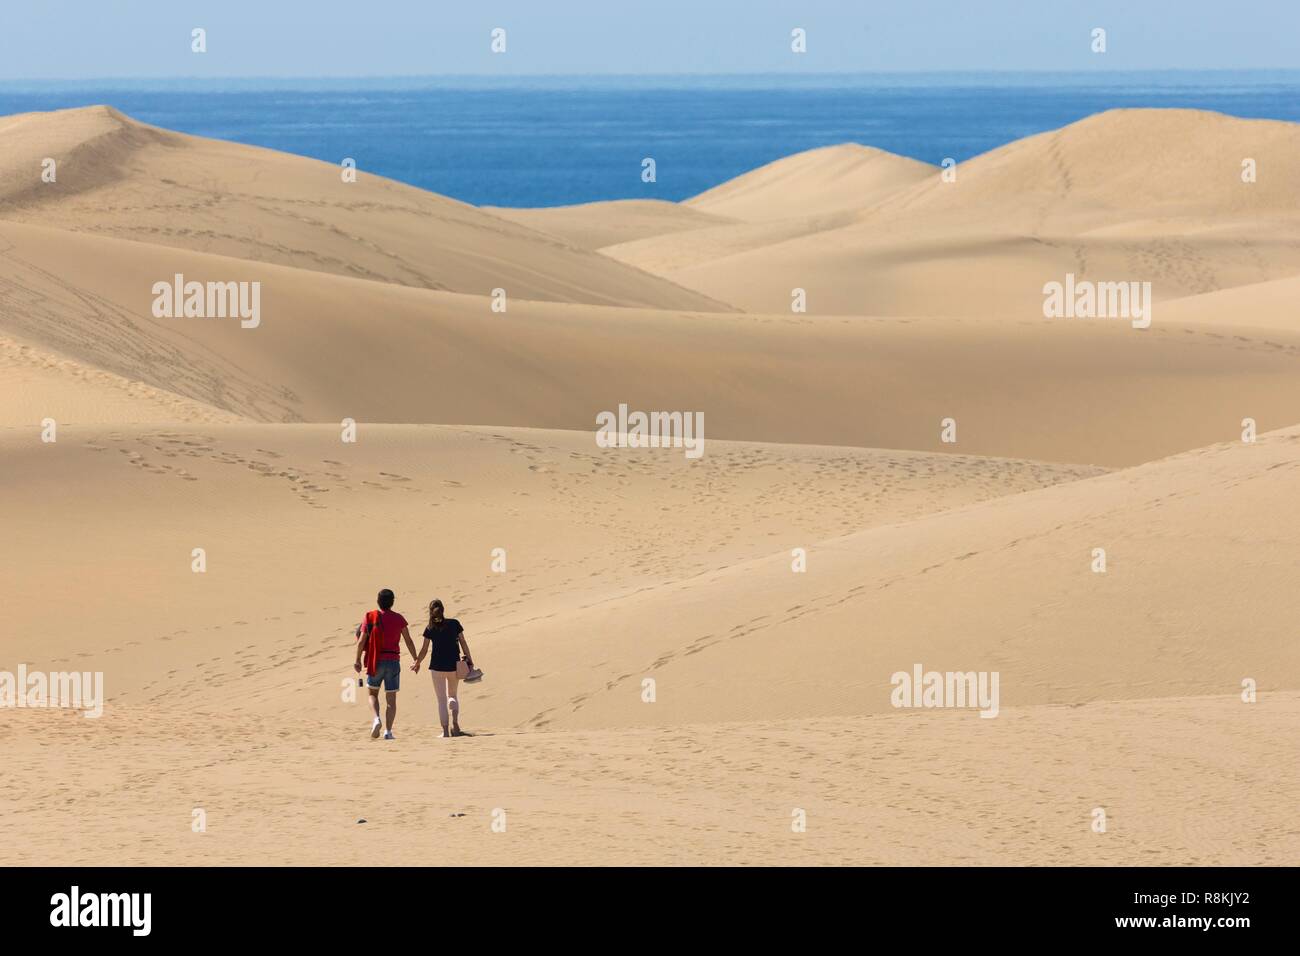 Spain, Canary Islands, Gran Canaria Island, the 250-hectare Maspalomas Dunes Stock Photo